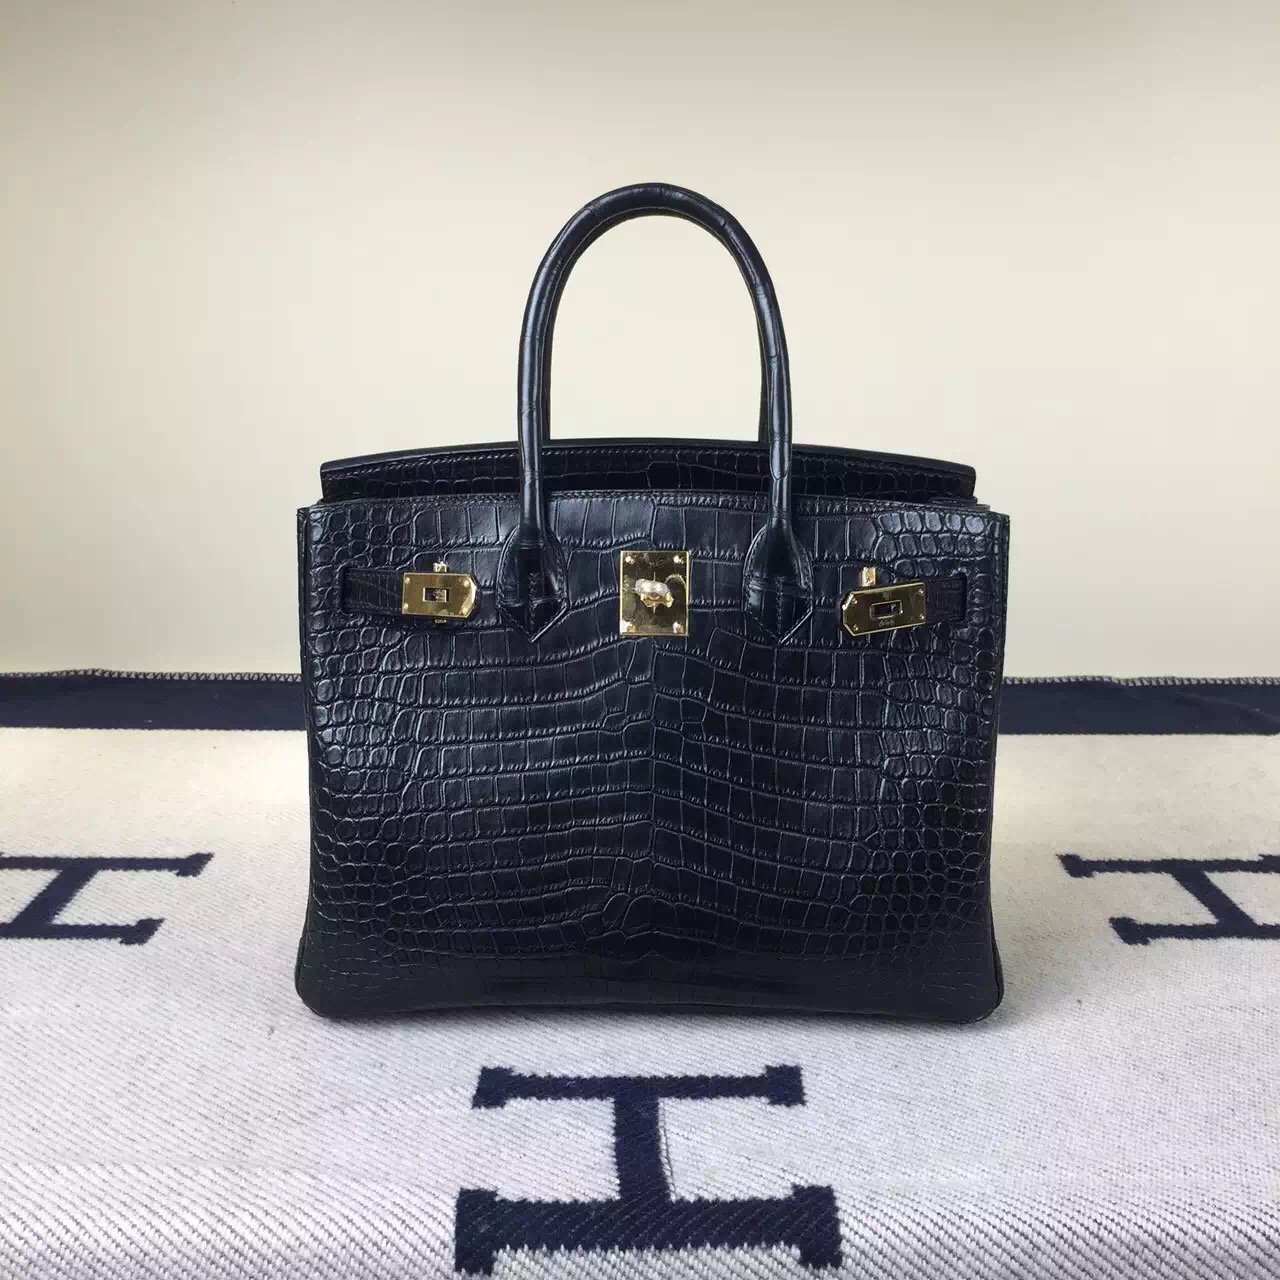 High Quality Hermes Crocodile Matt Leather Birkin Bag 30cm in CK89 Black